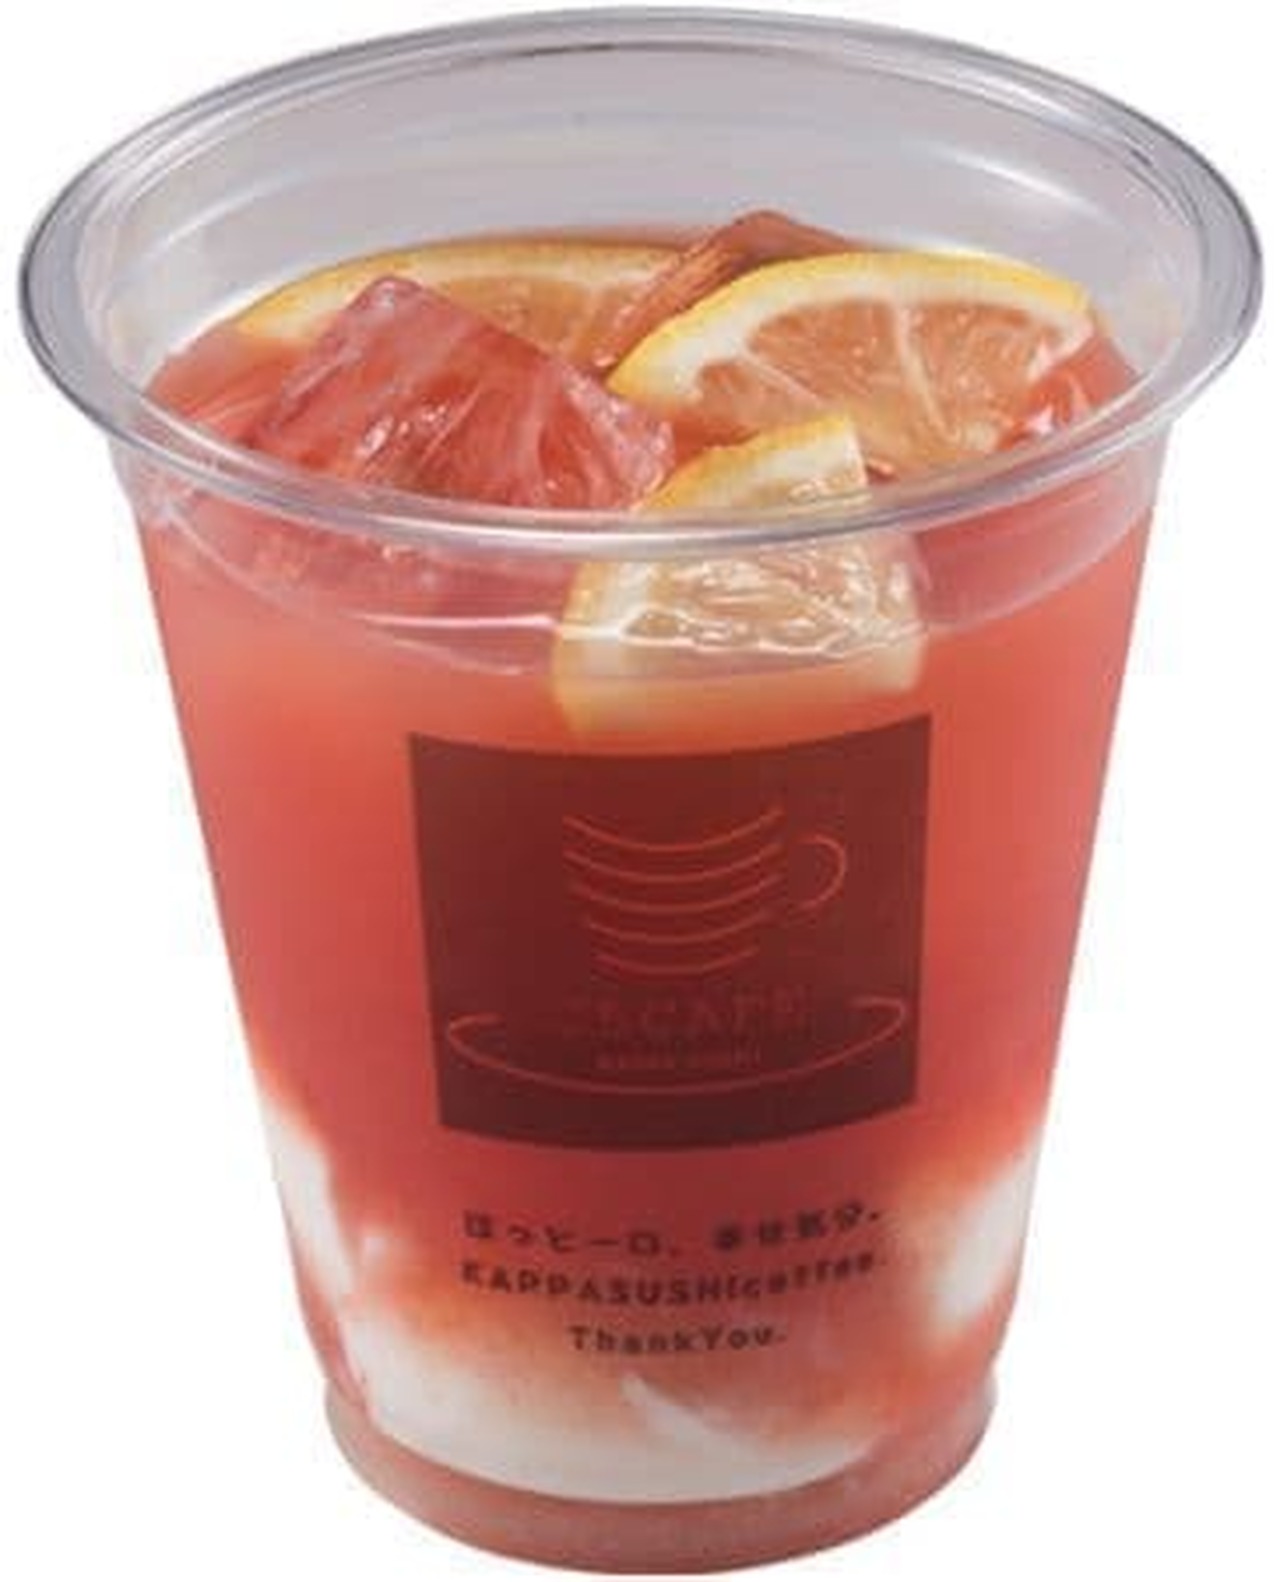 Kappa Sushi "Apricot kernel watermelon juice in-store preparation"